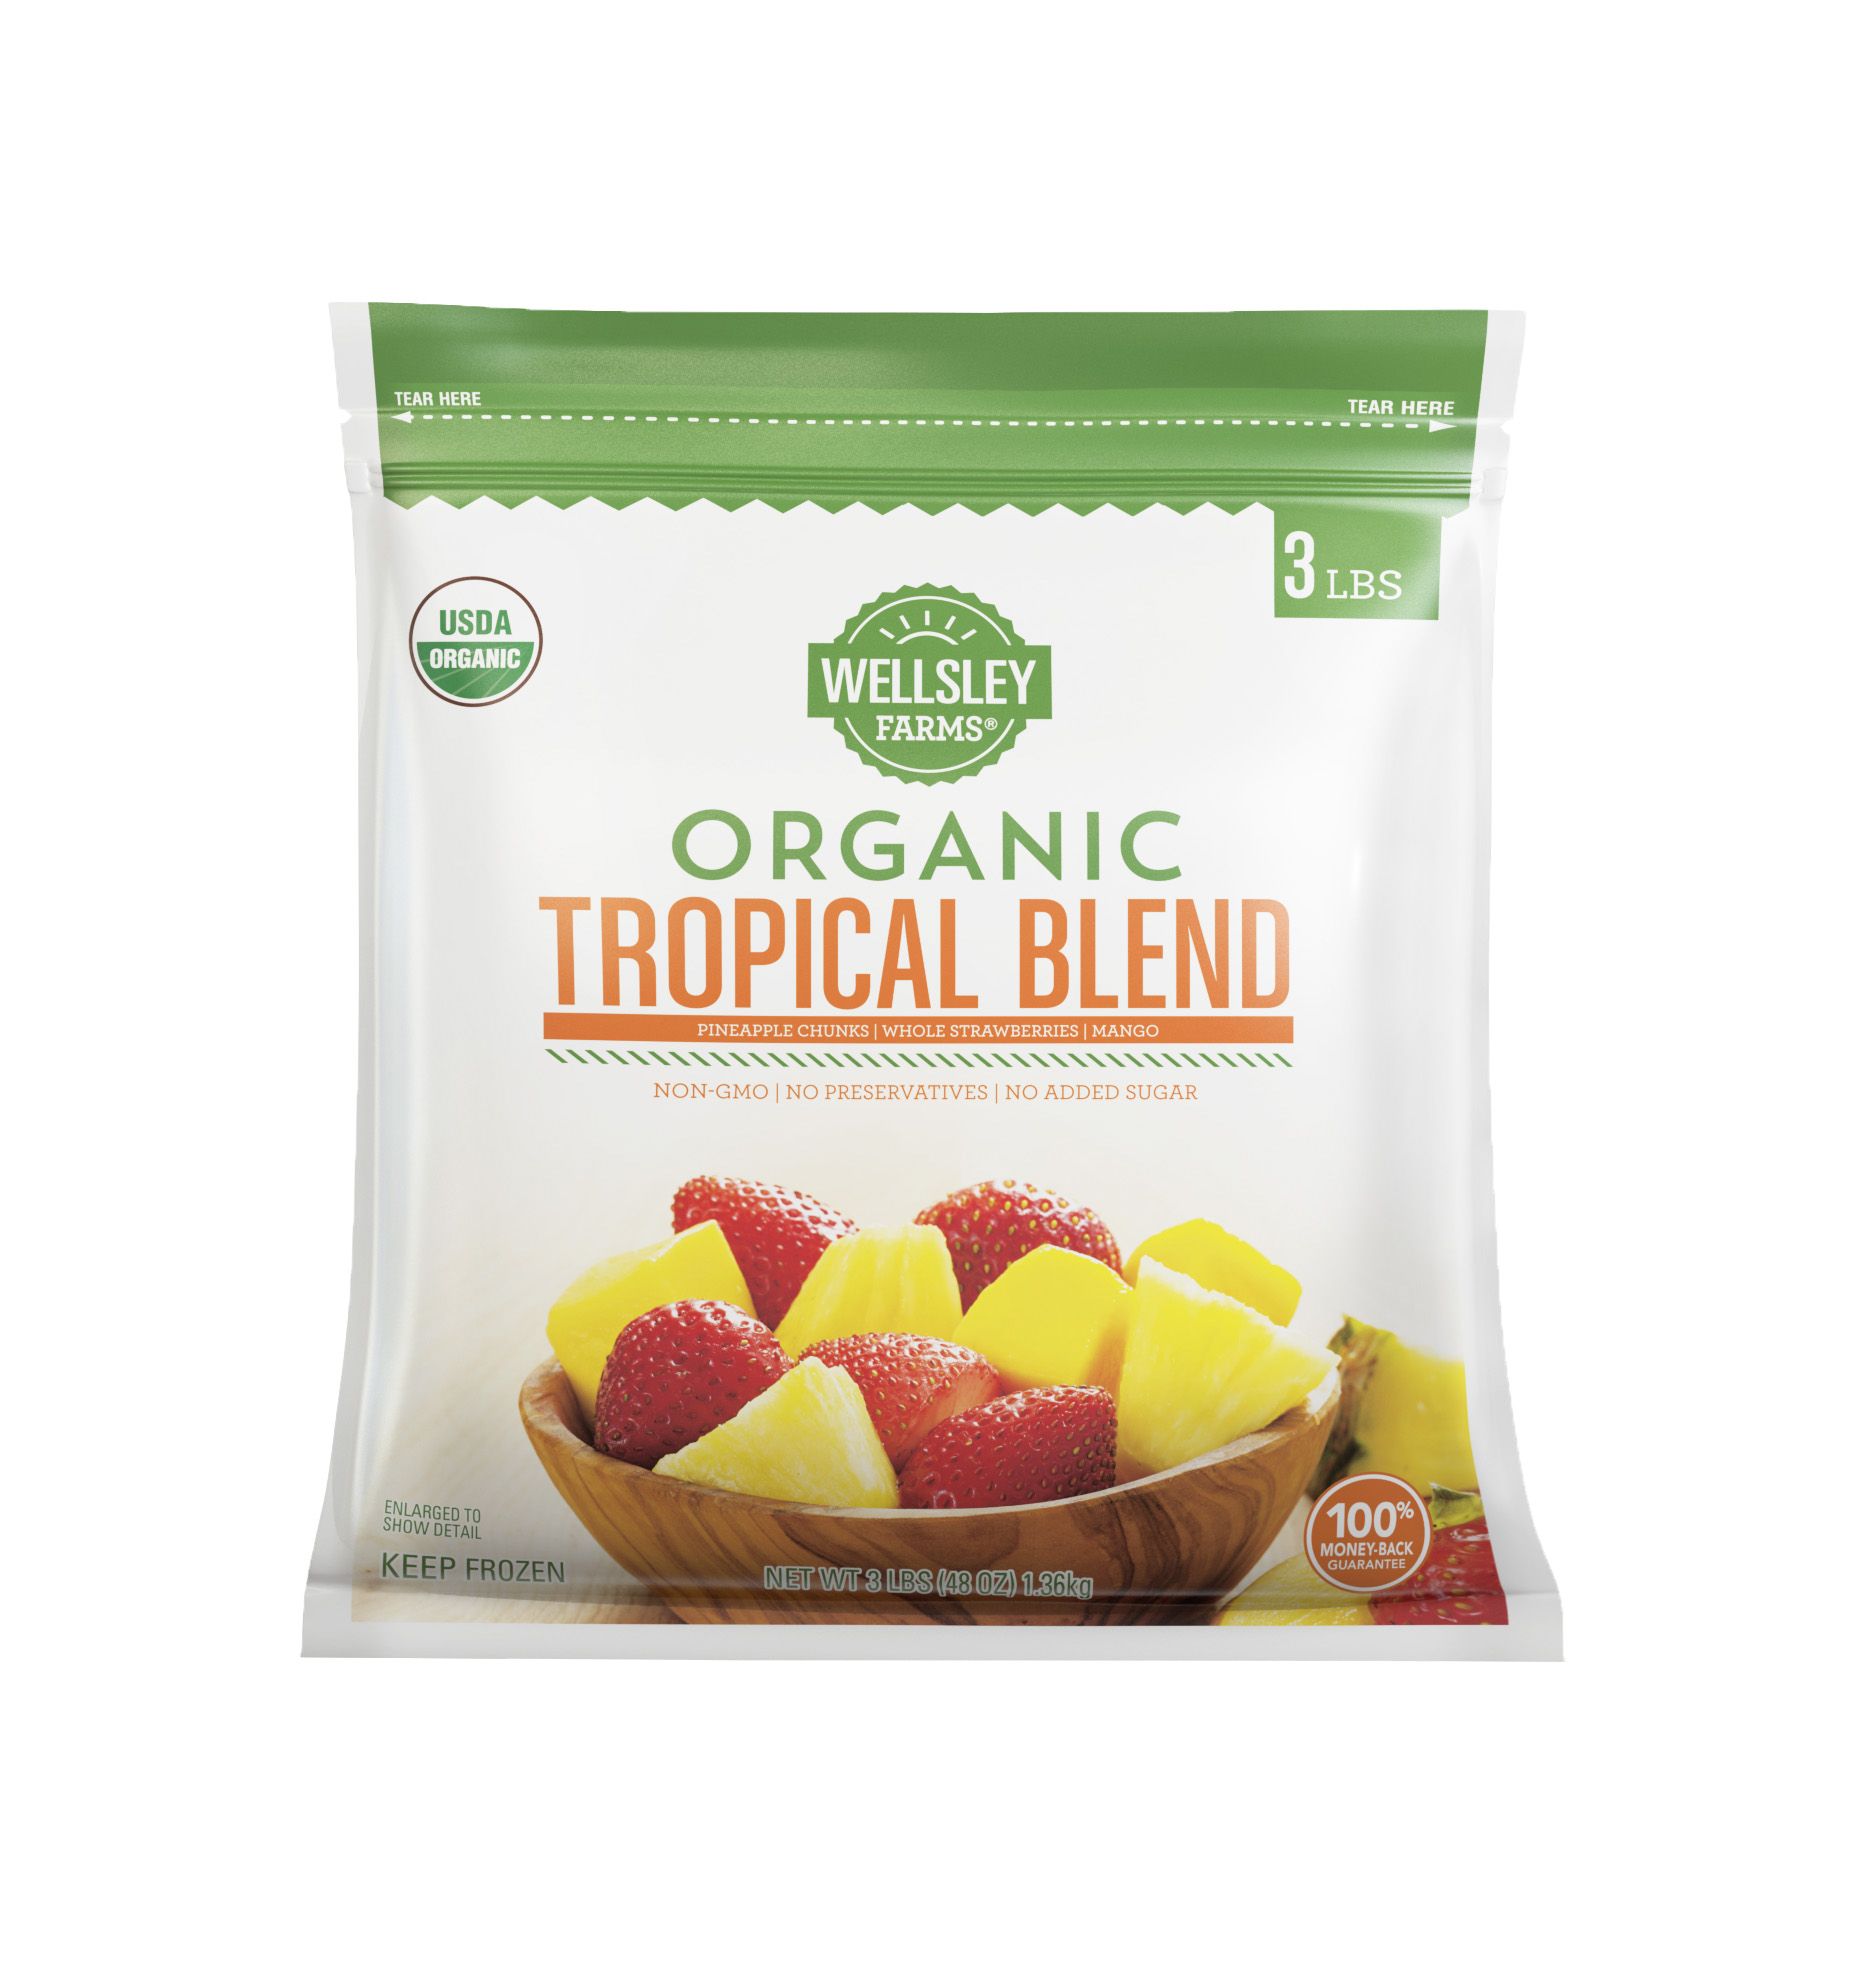 Wellsley Farms Organic Tropical Blend, 3 lbs. | BJ's Wholesale Club